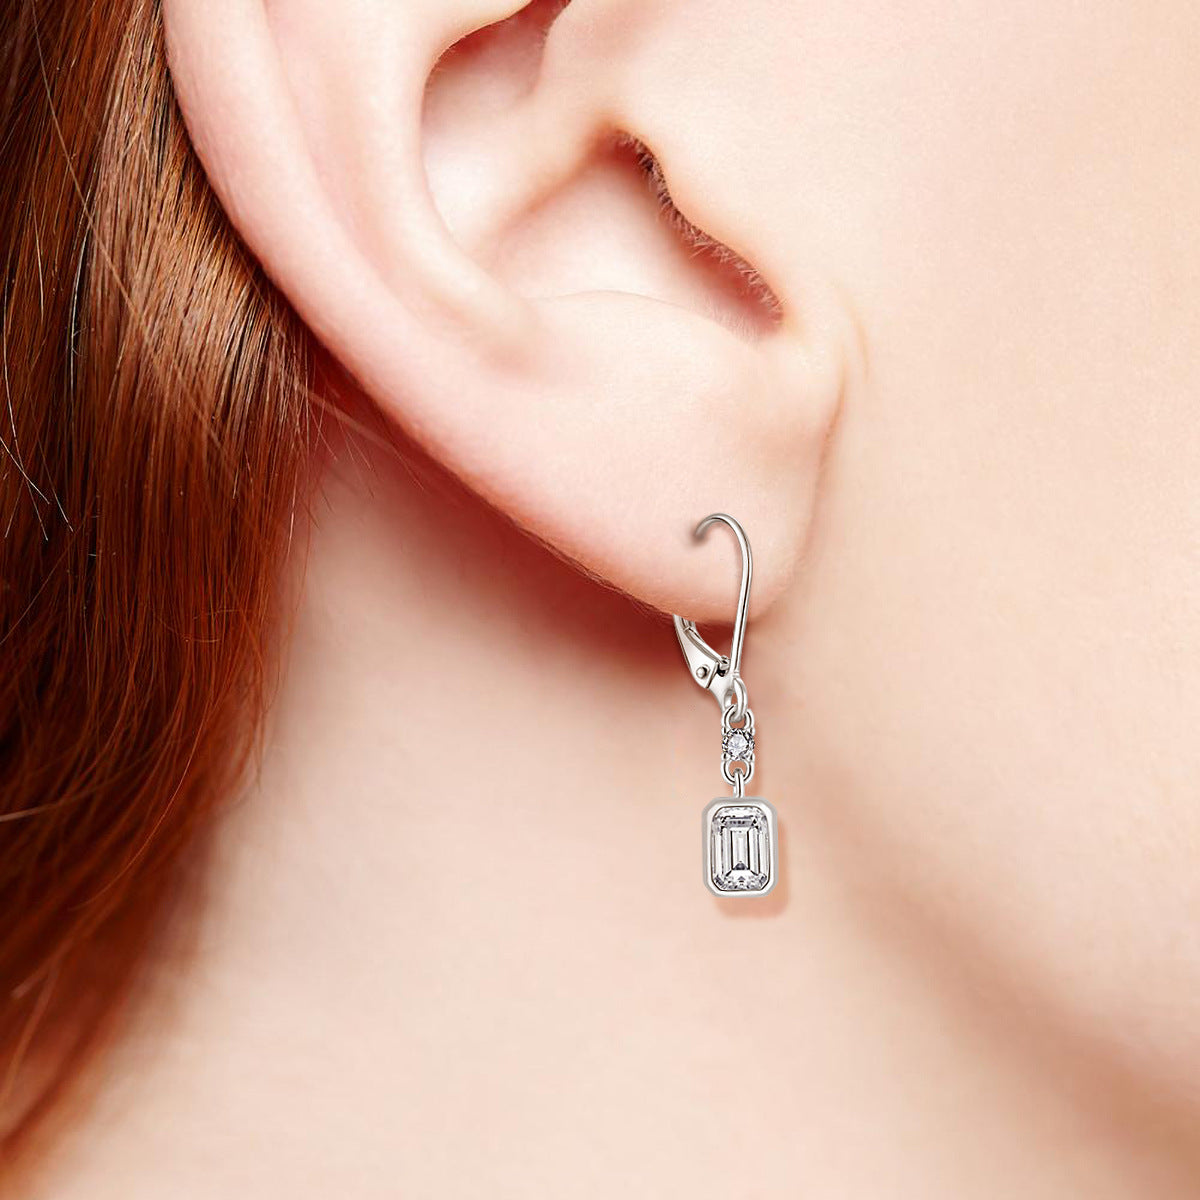 A woman's ear with an Unusual Stunning Rectangular Zircon Earrings Ear Hook S925 Silver earring from Maramalive™.